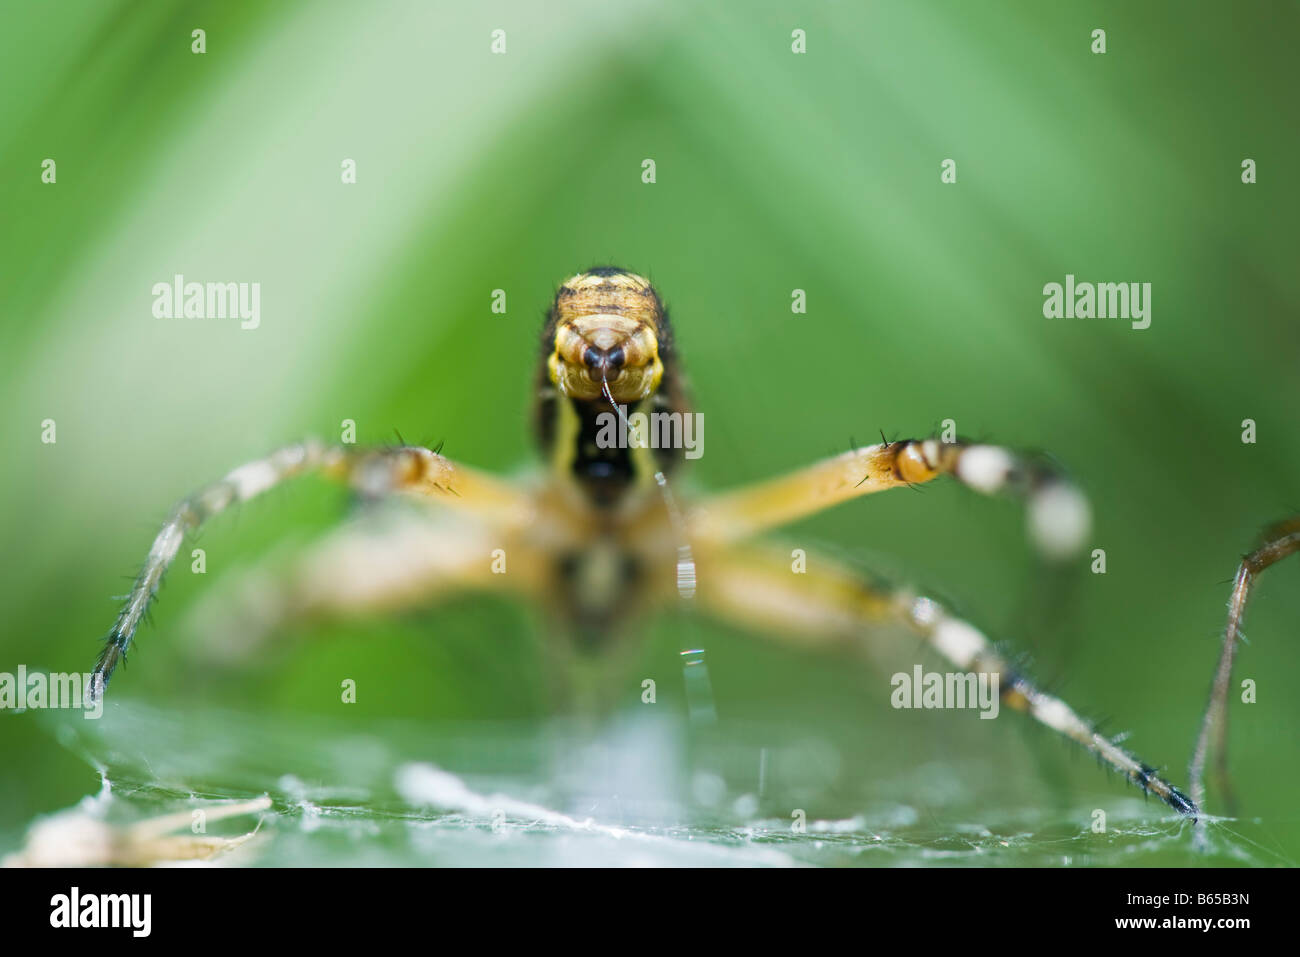 Yellow Garden Spider (argiope aurantia) spinning web, focus on spinneret Stock Photo